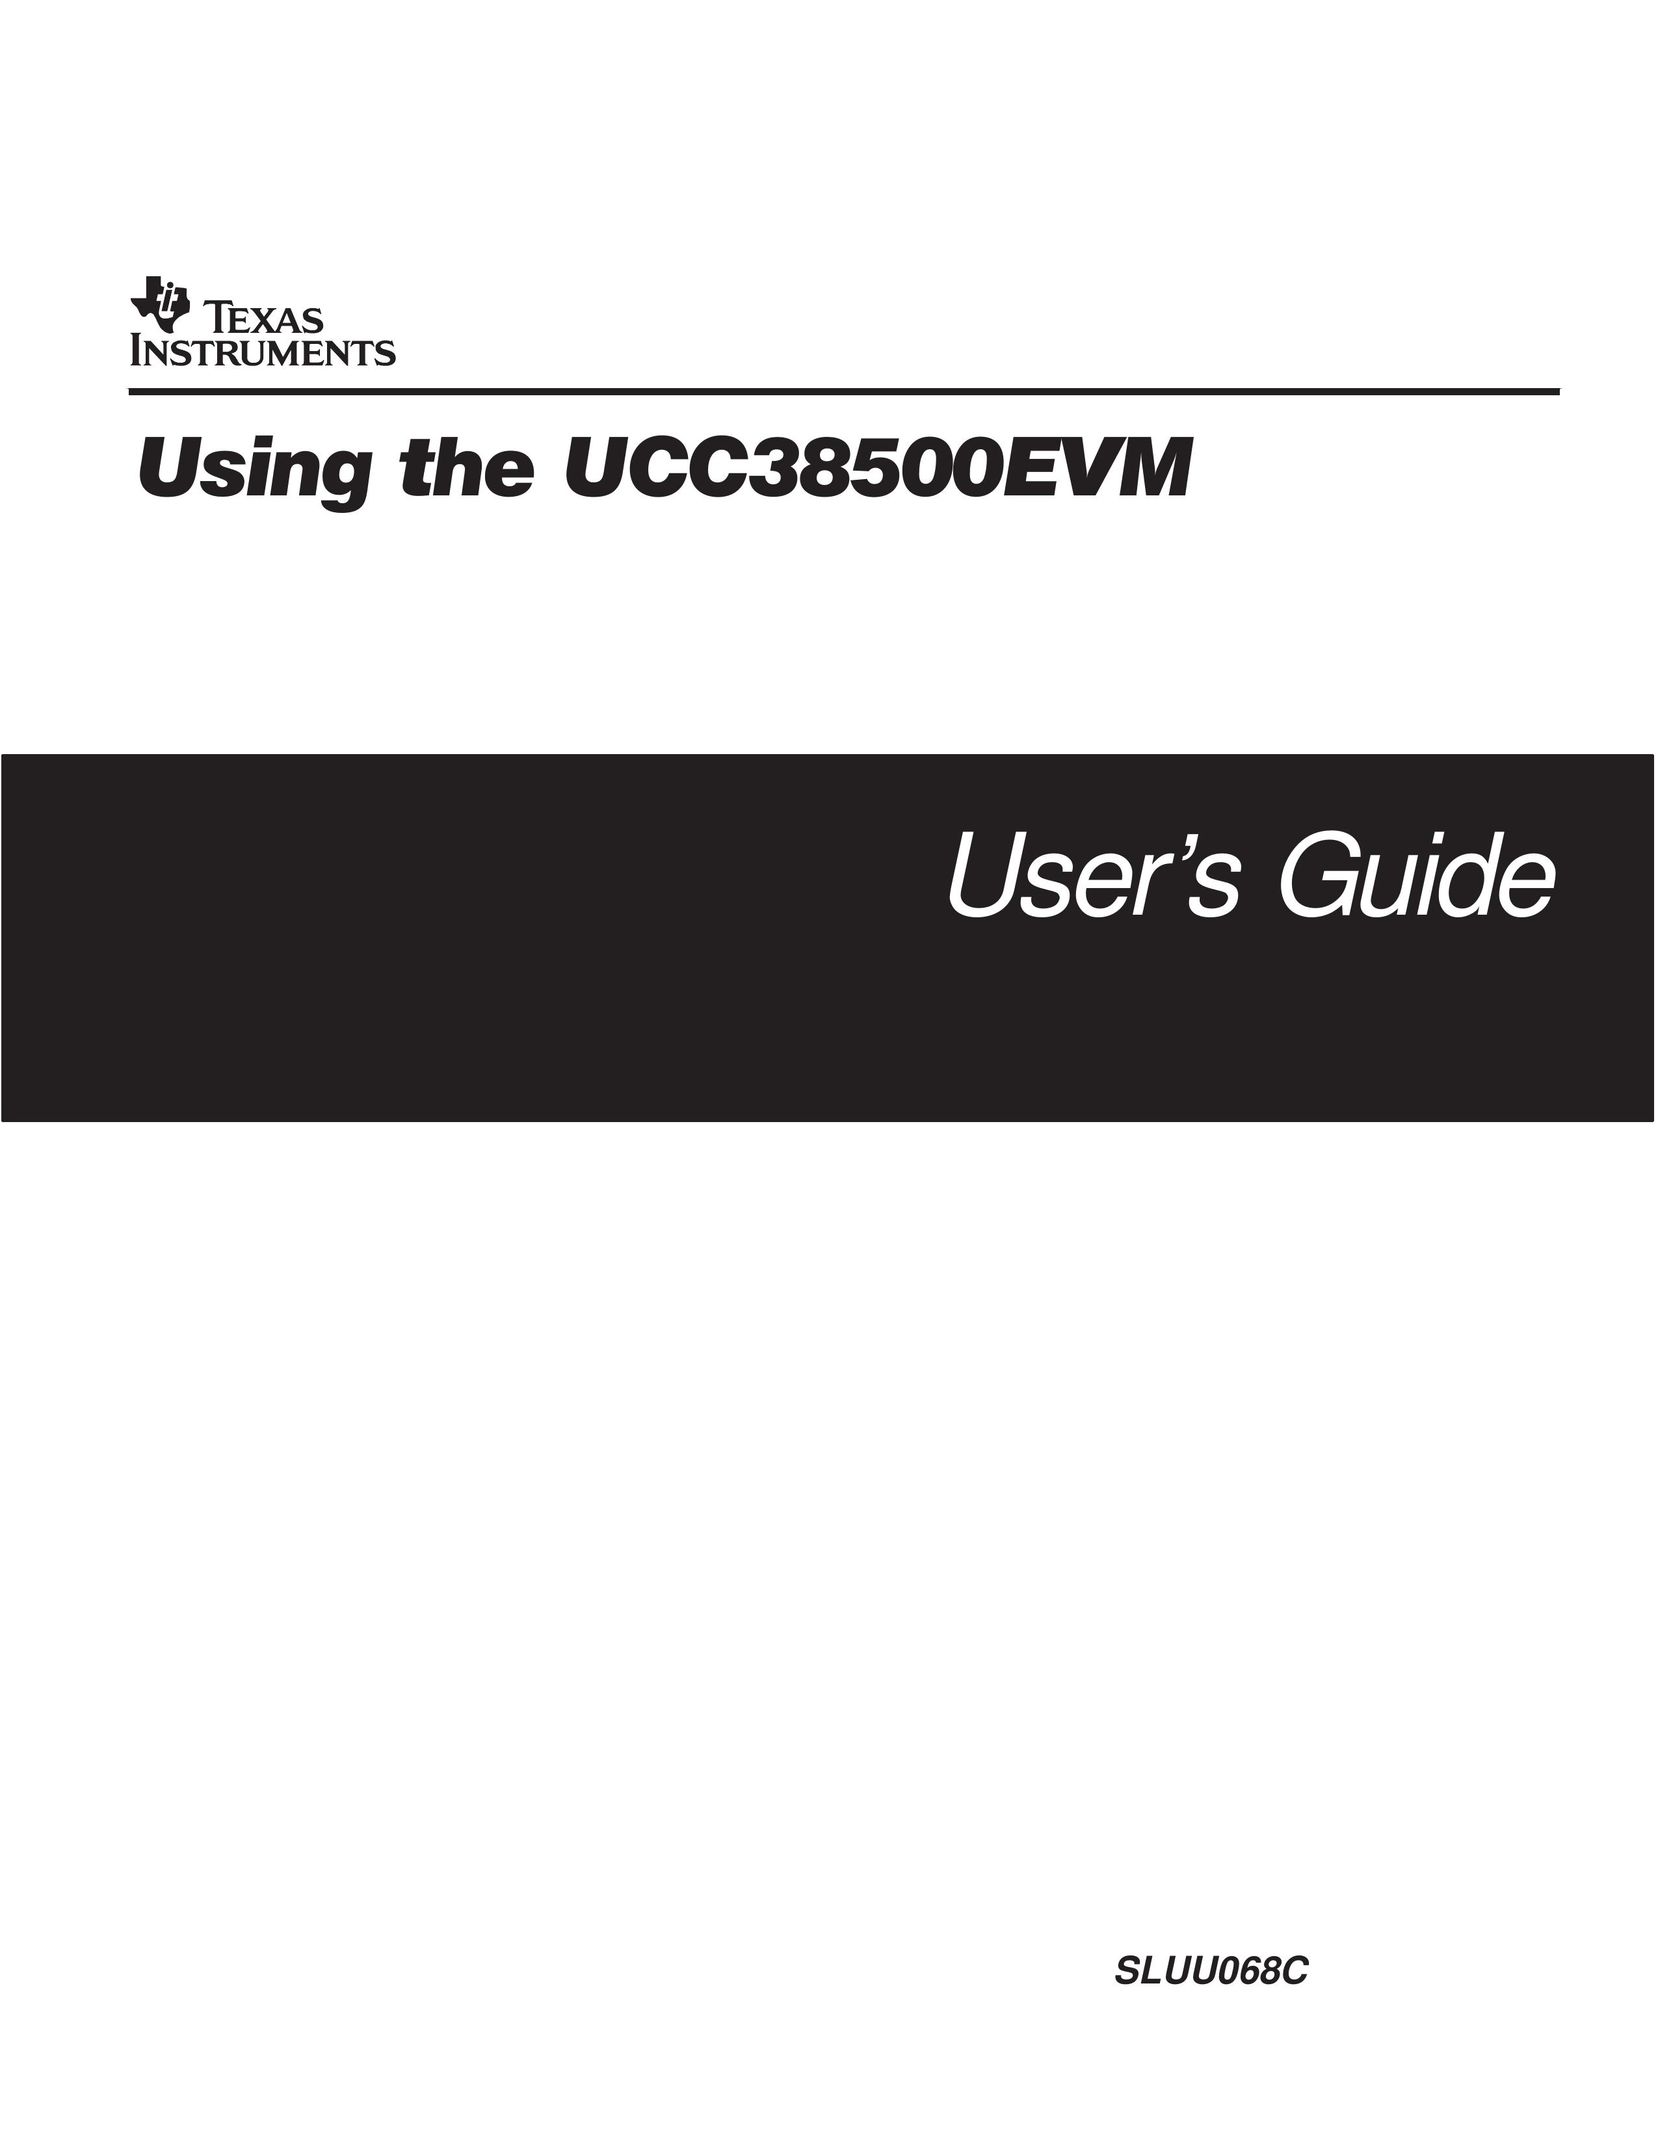 Texas Instruments UCC38500EVM Network Card User Manual